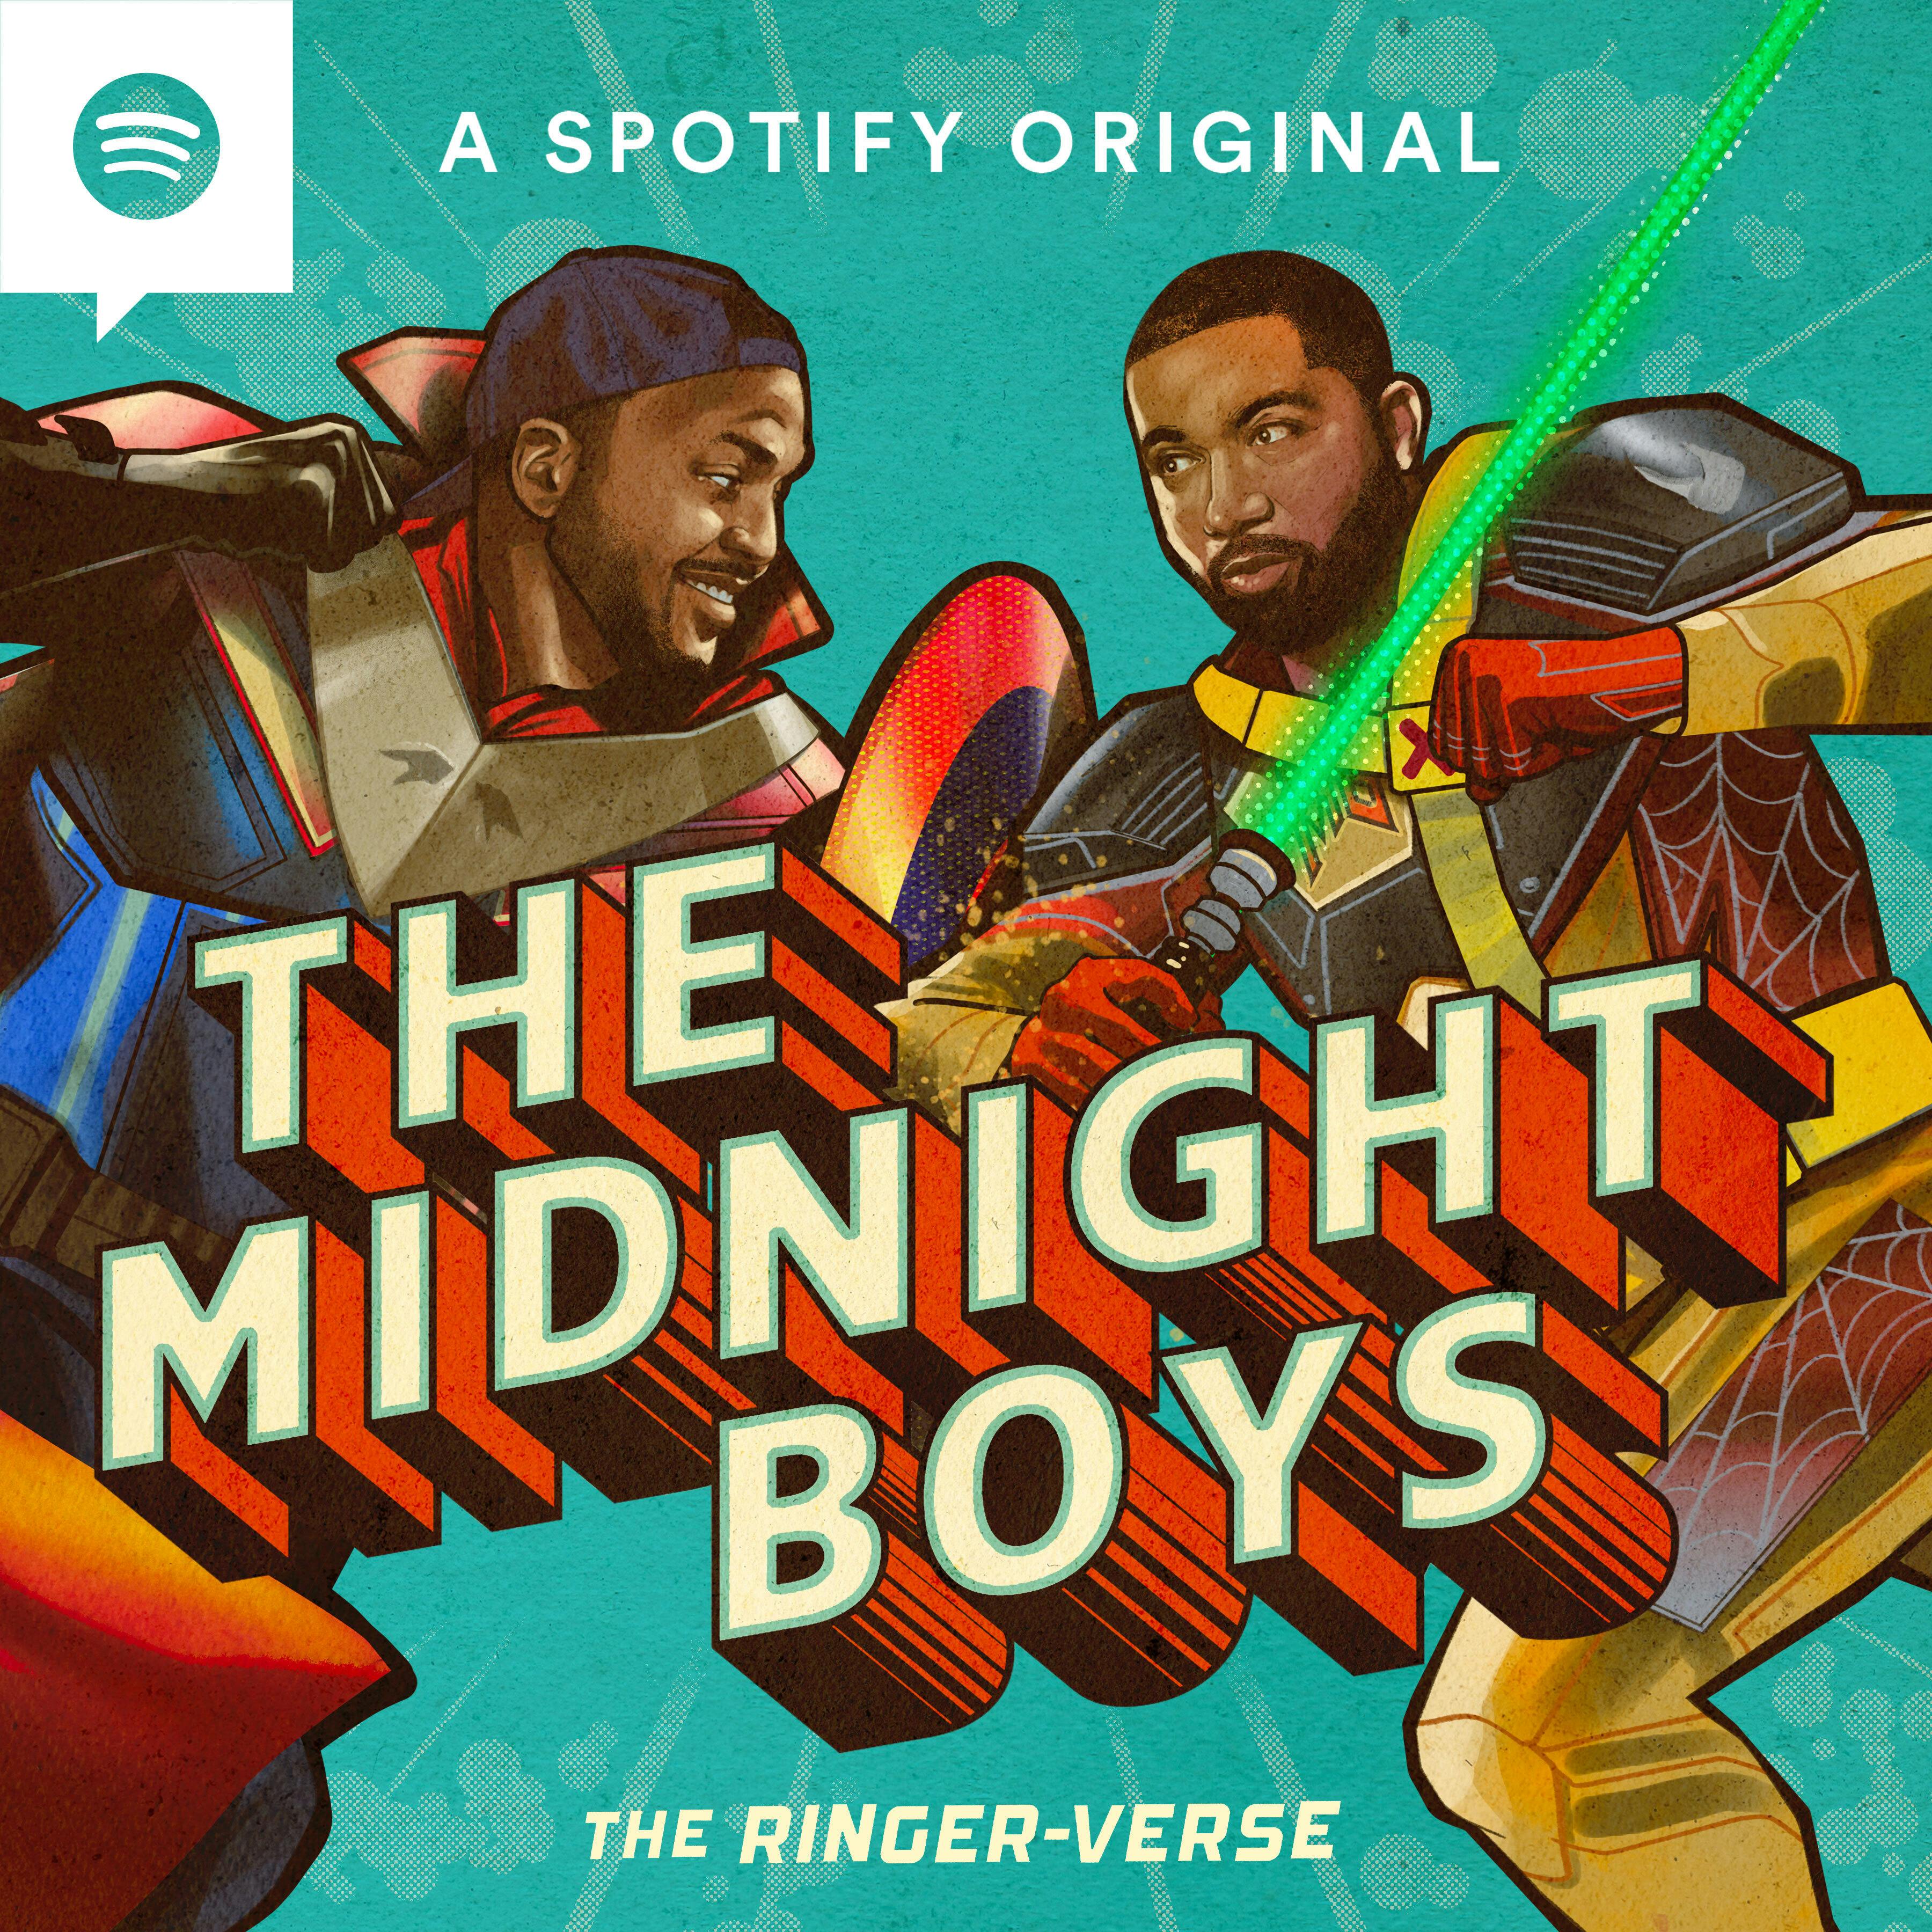 ’Secret Invasion’ Episode 1 Instant Reactions | The Midnight Boys